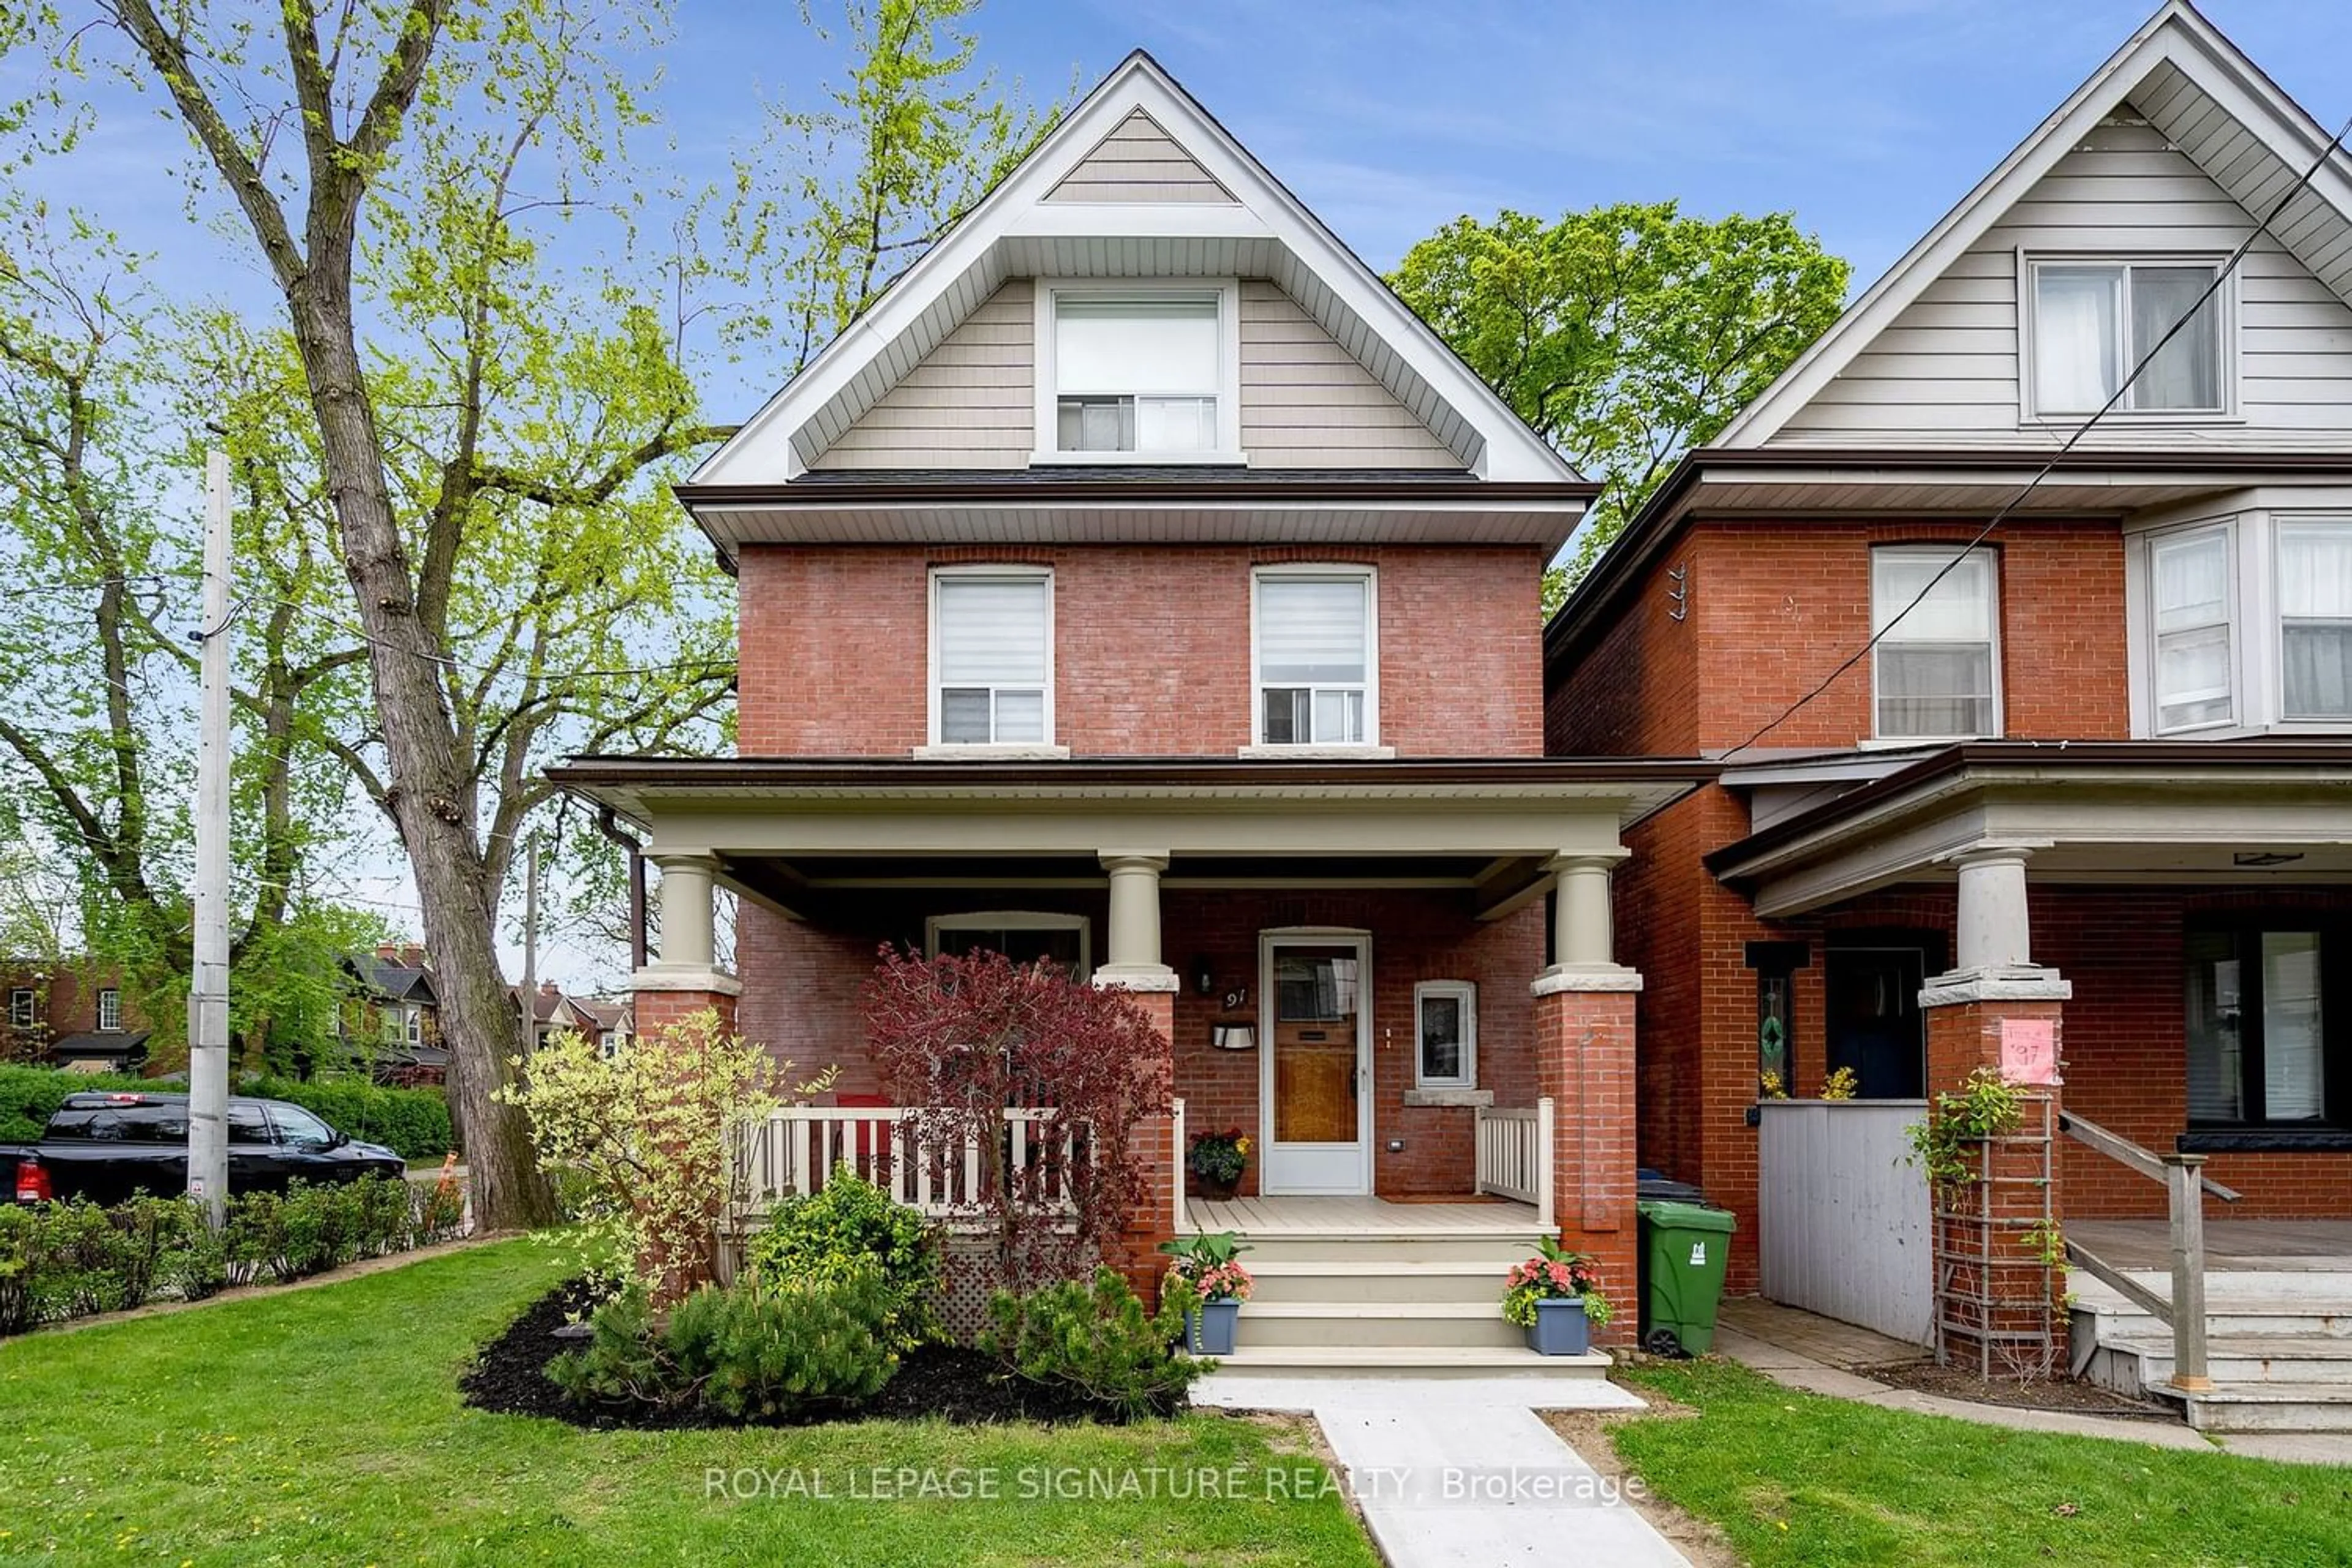 Home with brick exterior material for 91 St Johns Rd, Toronto Ontario M6P 1V1